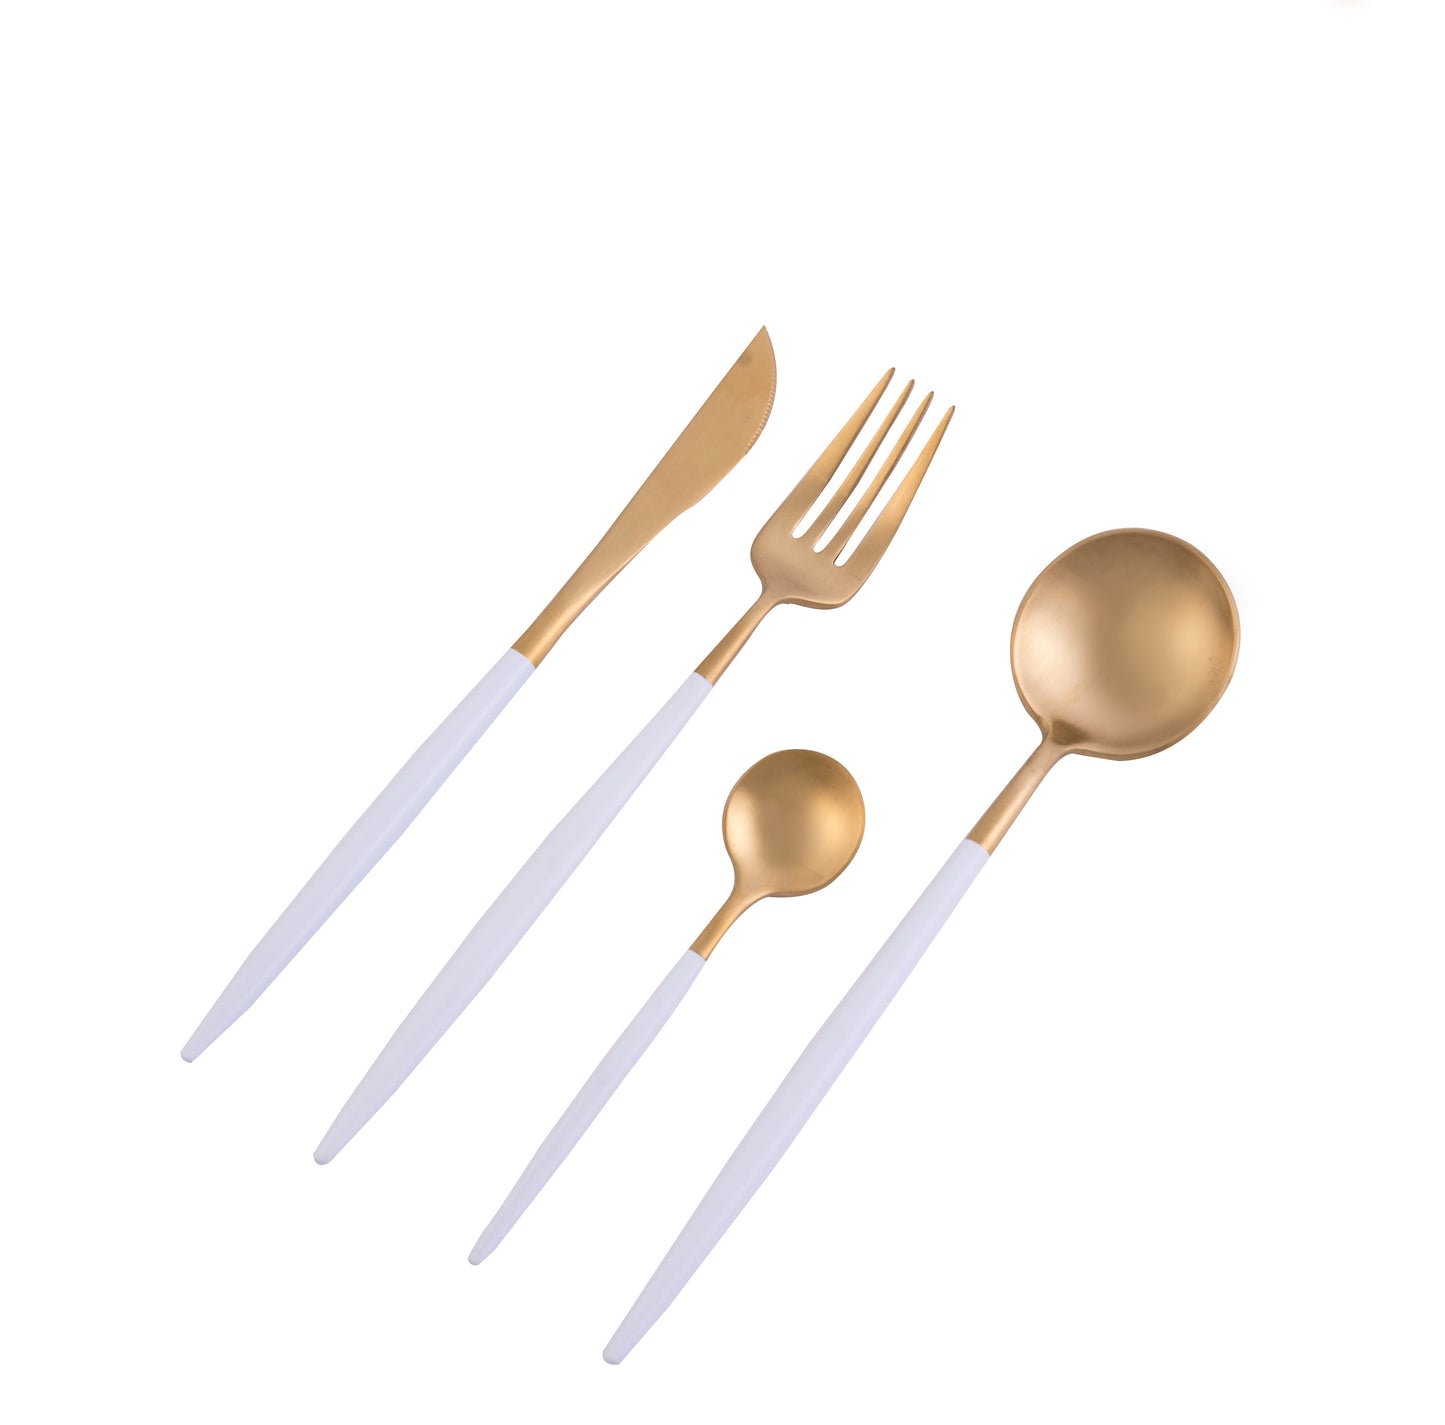 Dubai 16 Piece Cutlery Set - White and Gold